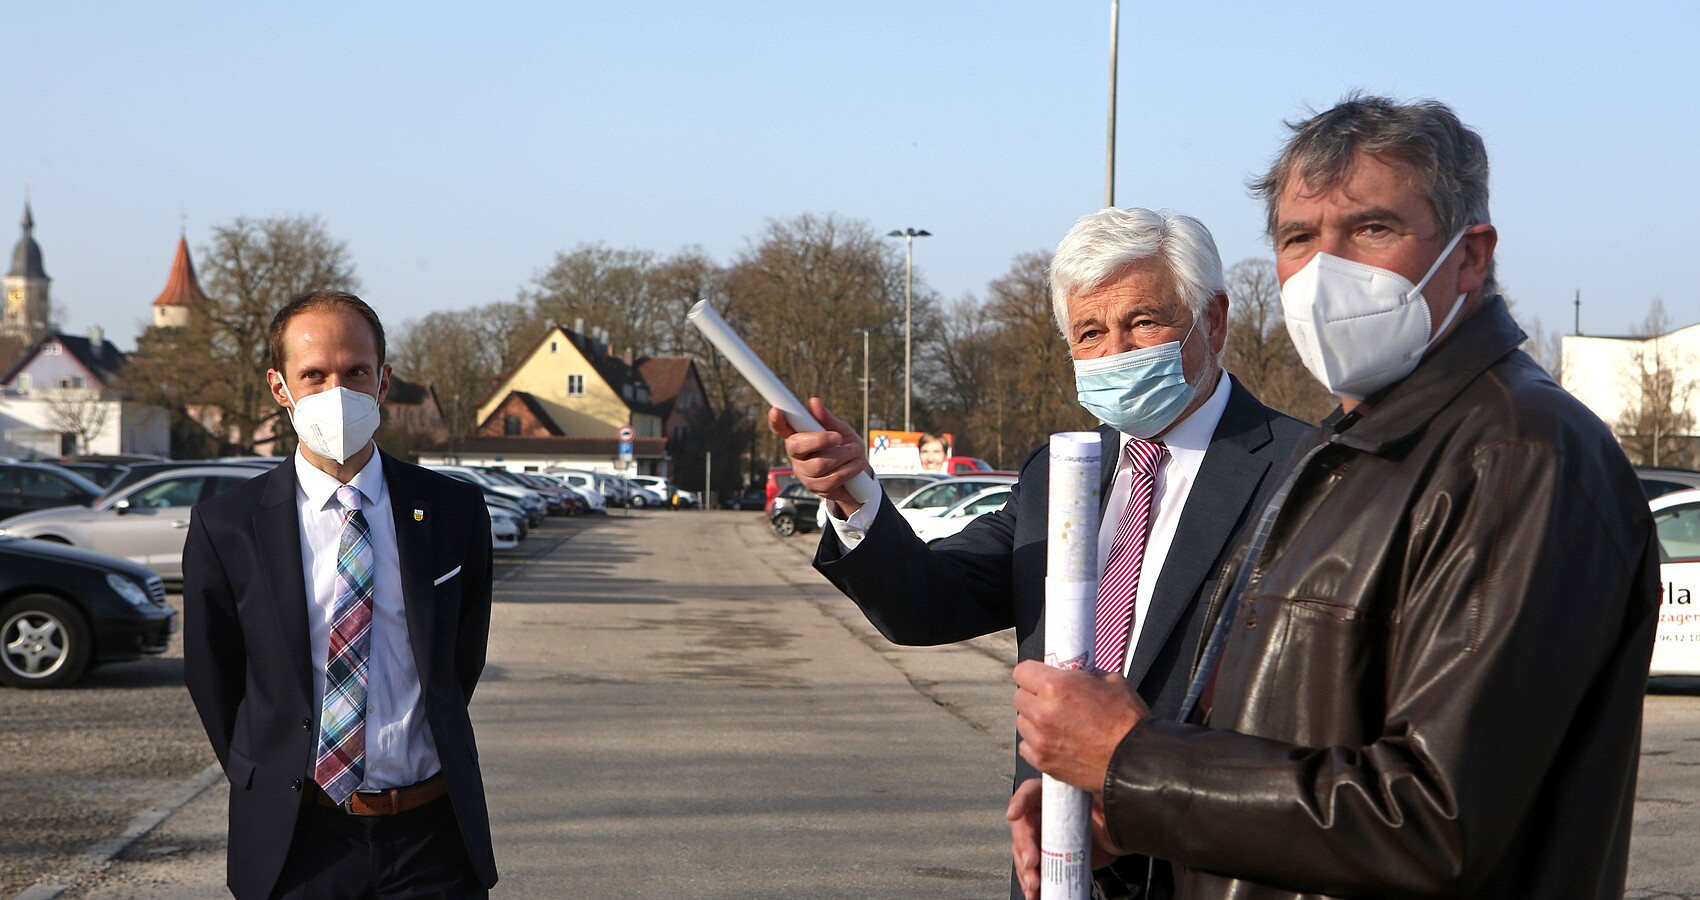 Regierungspräsident Wolfgang Reimer übergibt zwei Förderbescheide an Oberbürgermeister Dr. Christoph Grimmer